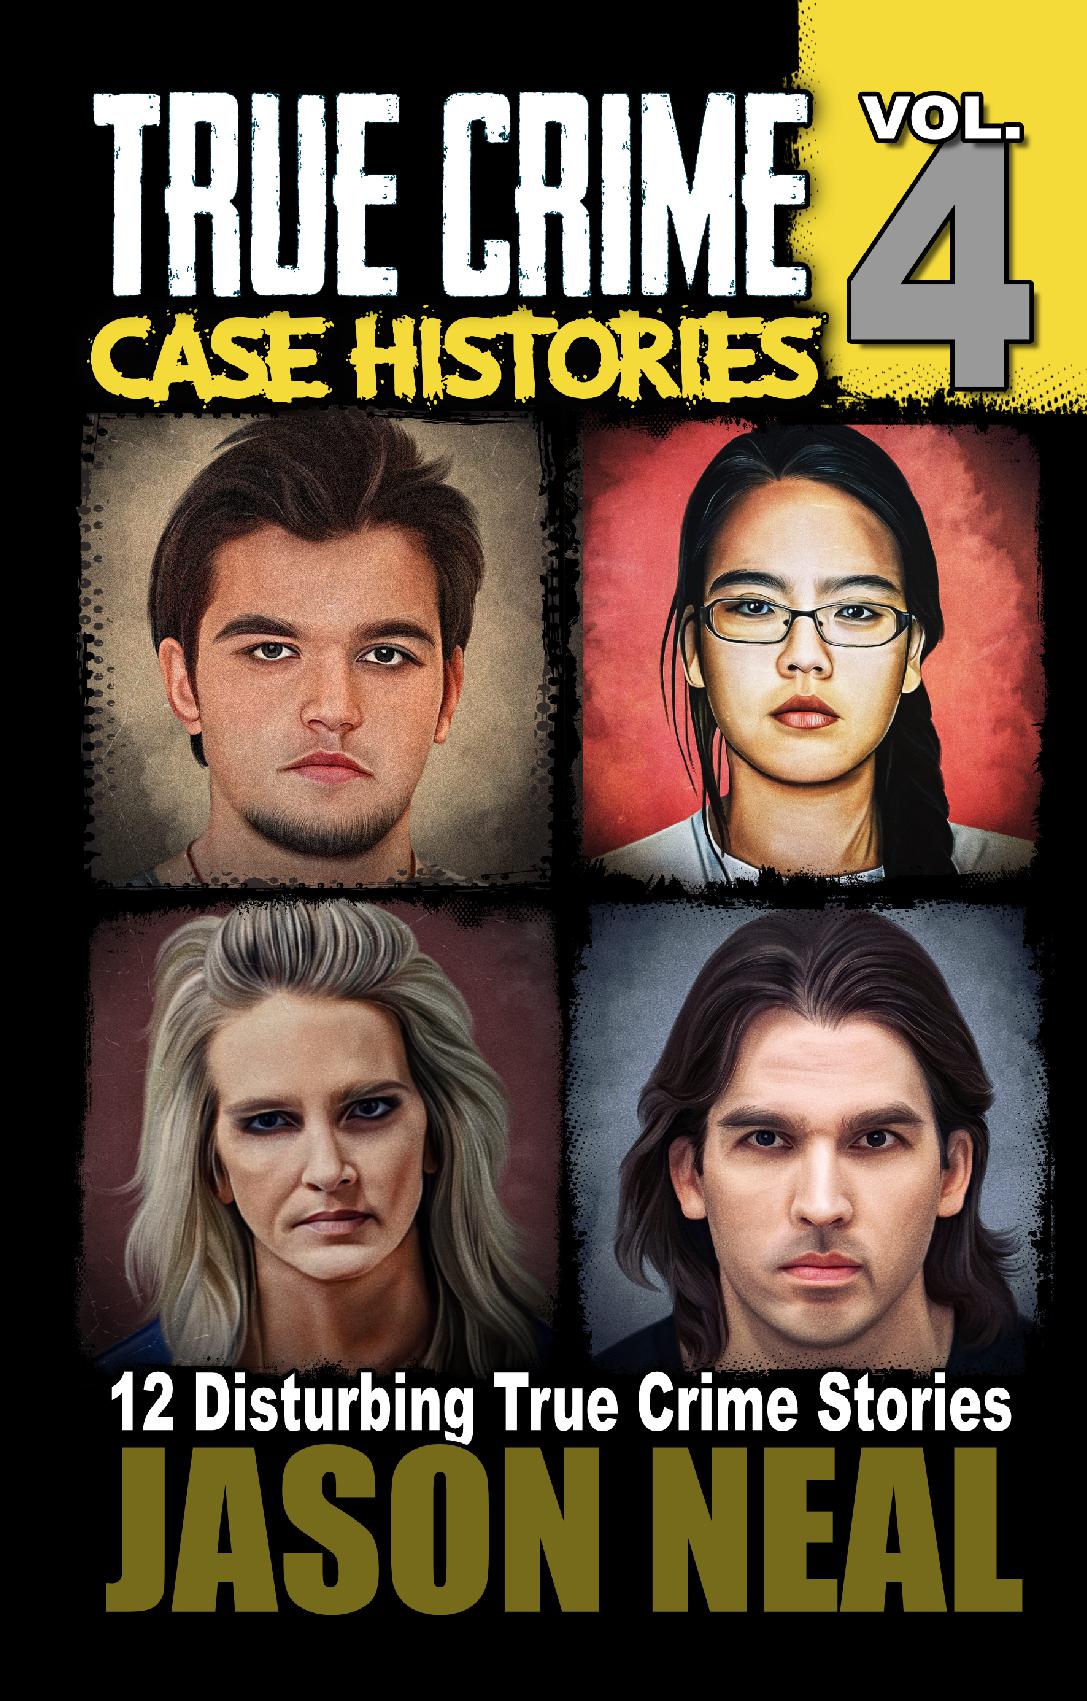 True Crime Case Histories - Volume 4 (HARDCOVER)